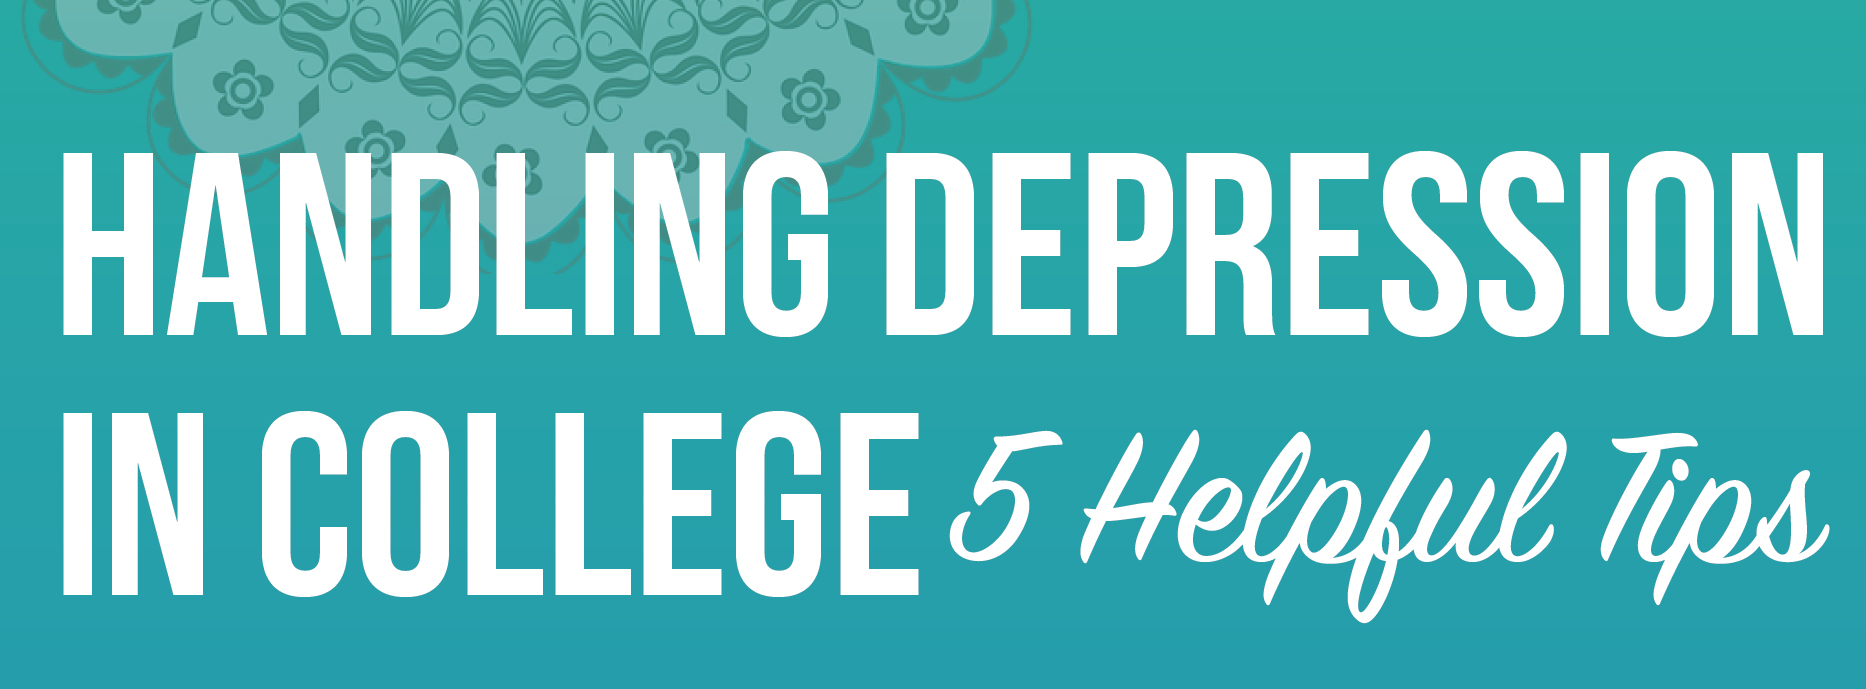 Handling Depression in College